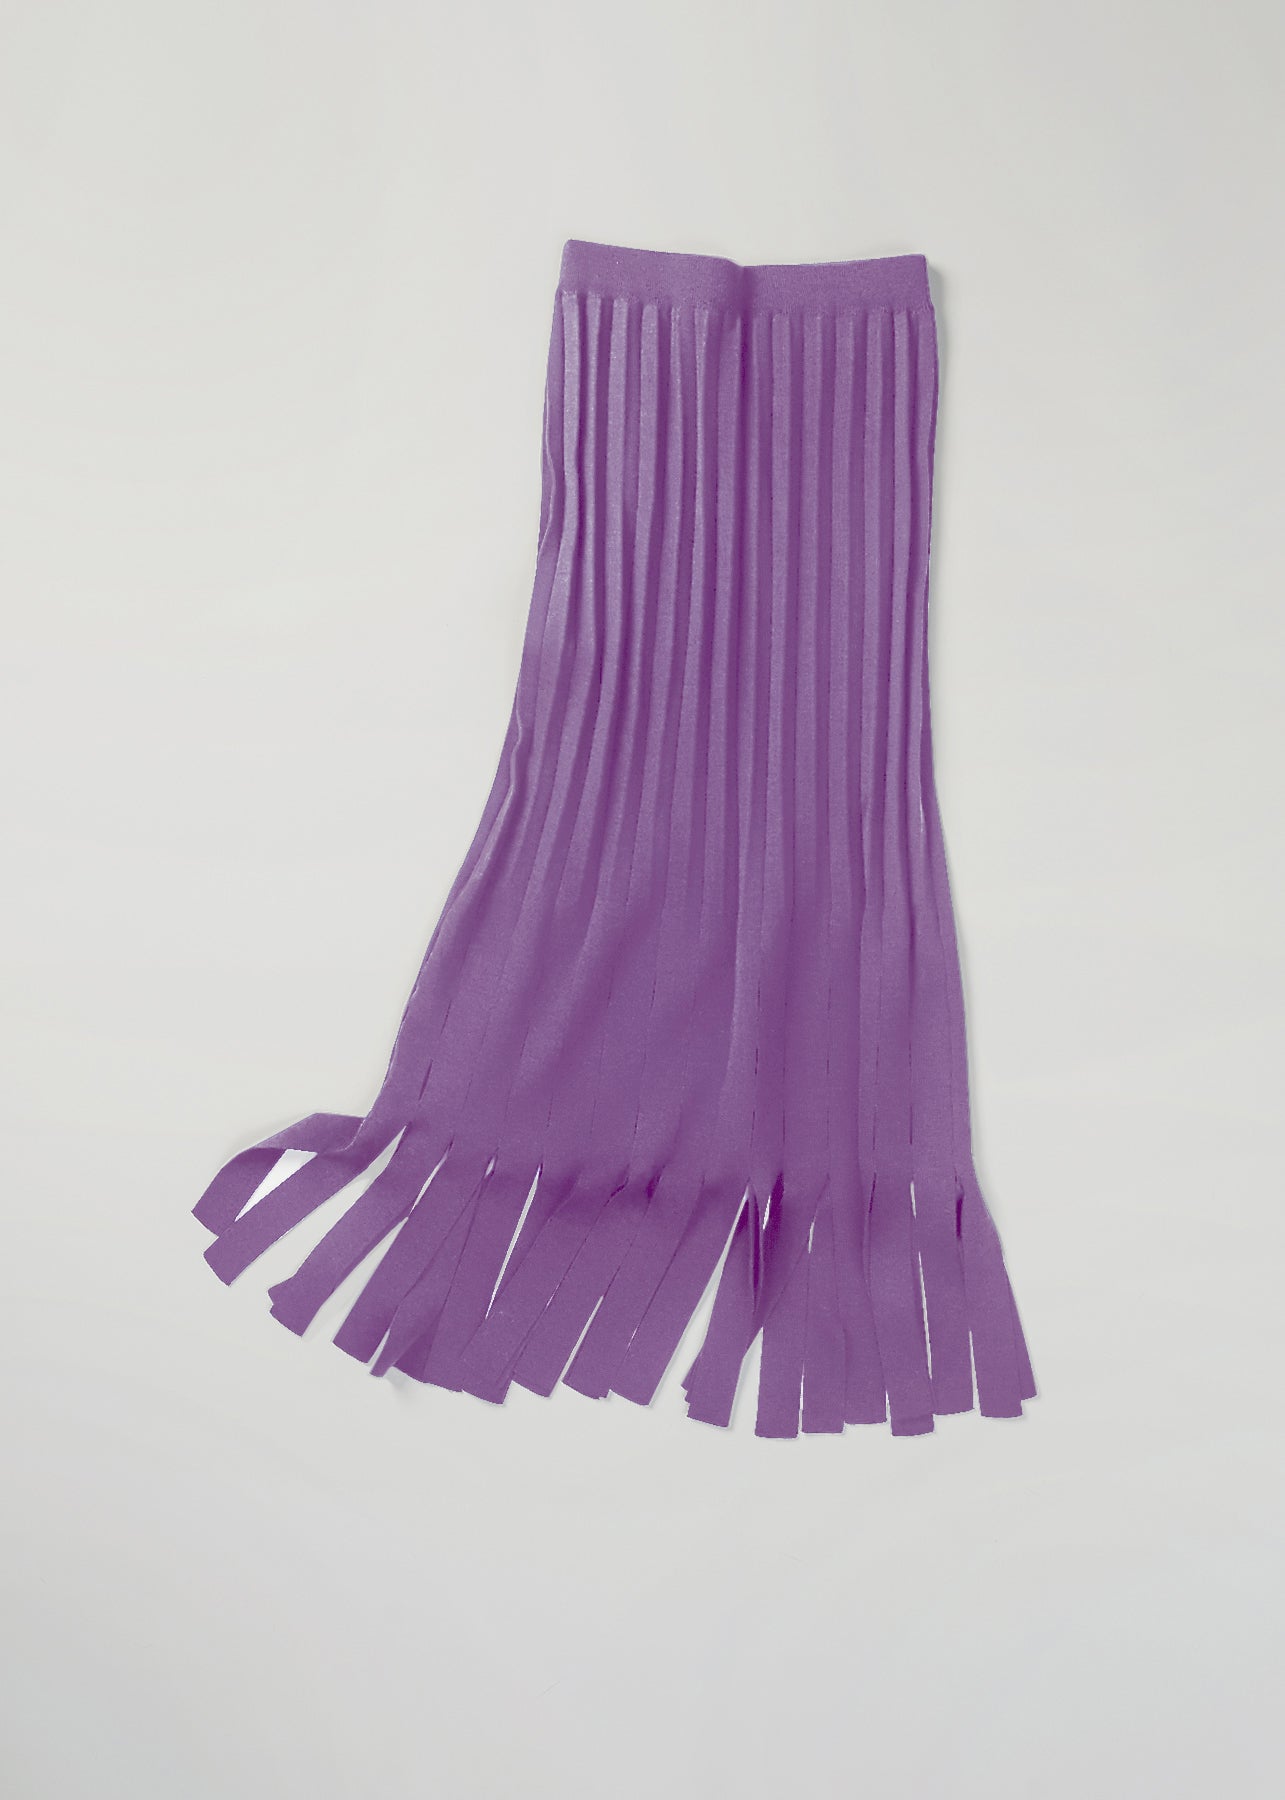 AERON ARTIC Fringed skirt – lavender